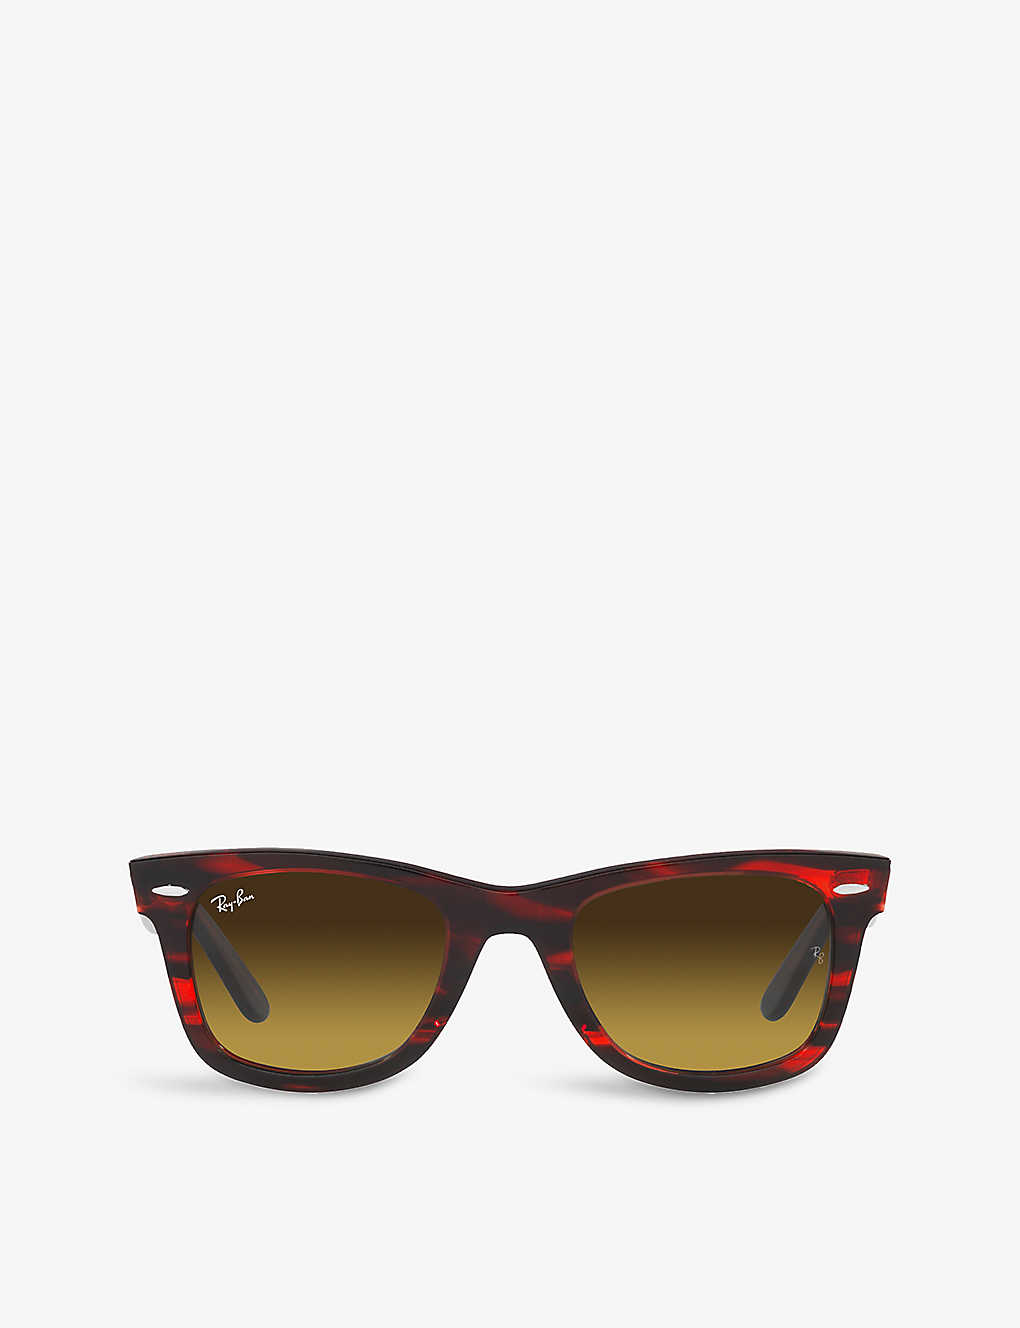 Ray Ban Ray-ban Womens Red Rb2140 Wayfarer Tortoiseshell Acetate Sunglasses